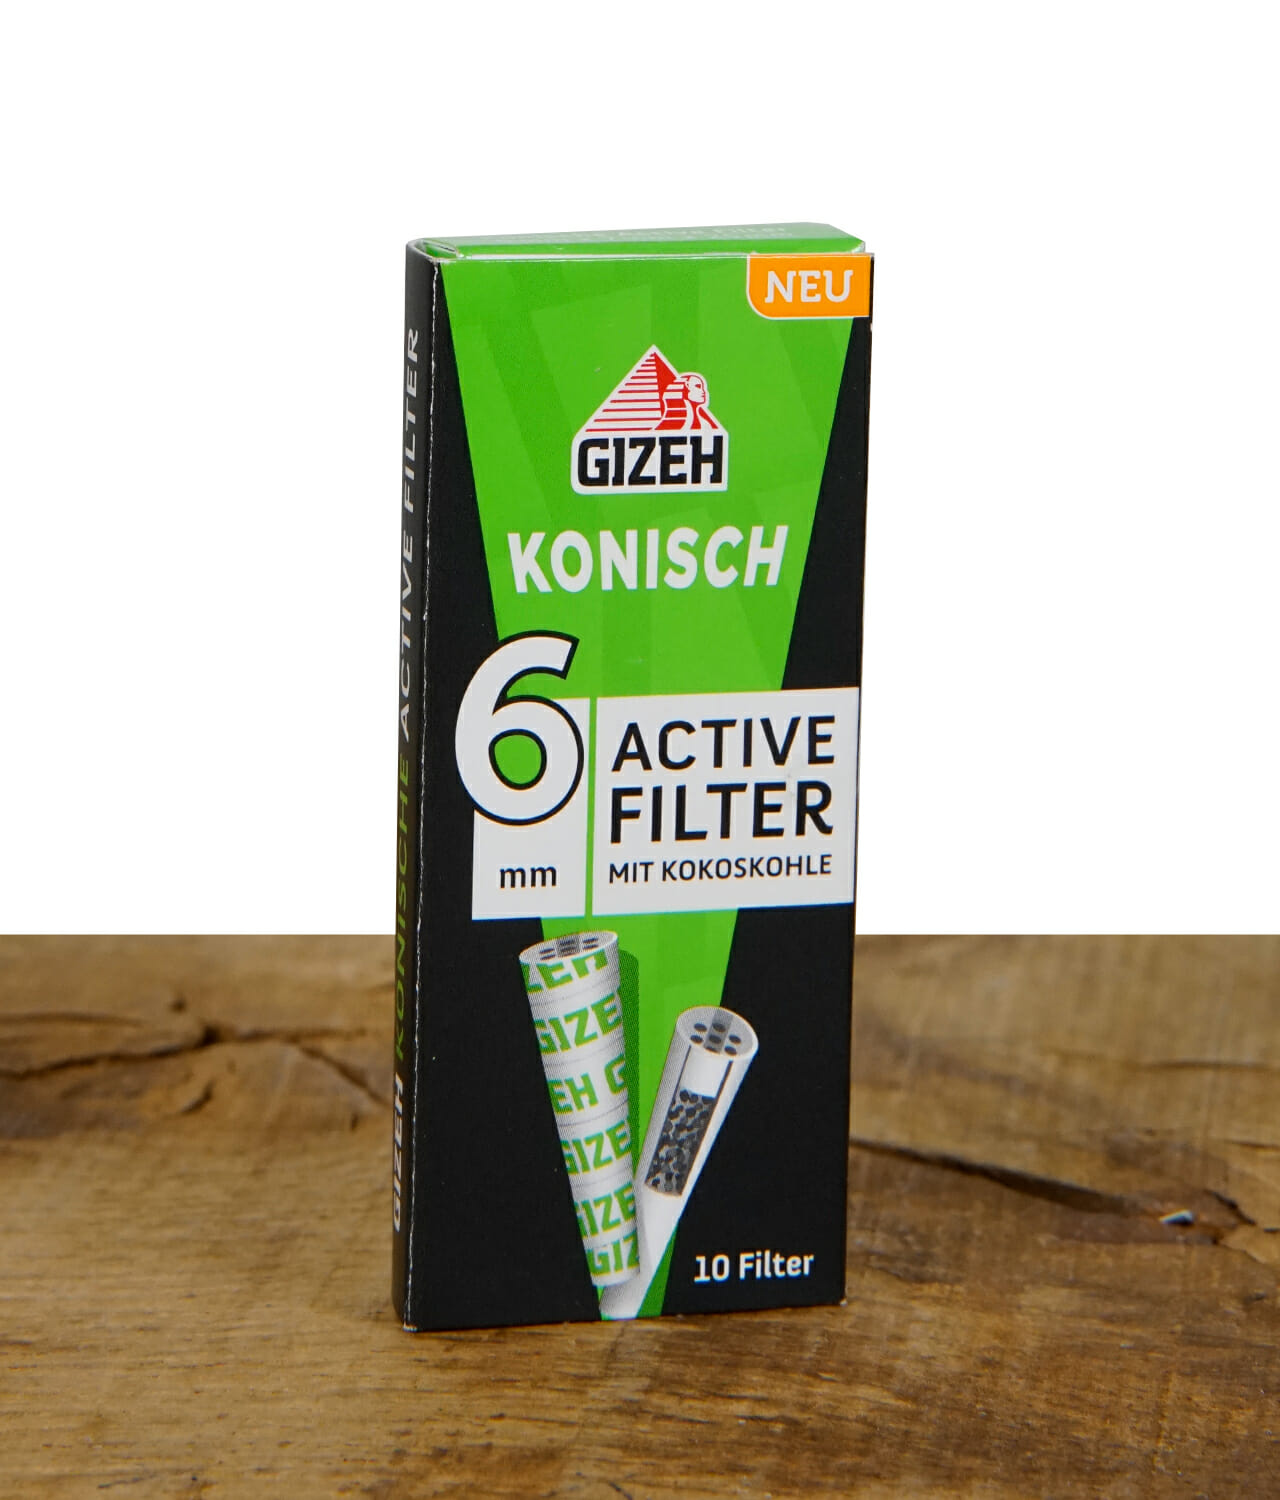 GIZEH Active Filter konisch 6-7mm 10er Pack